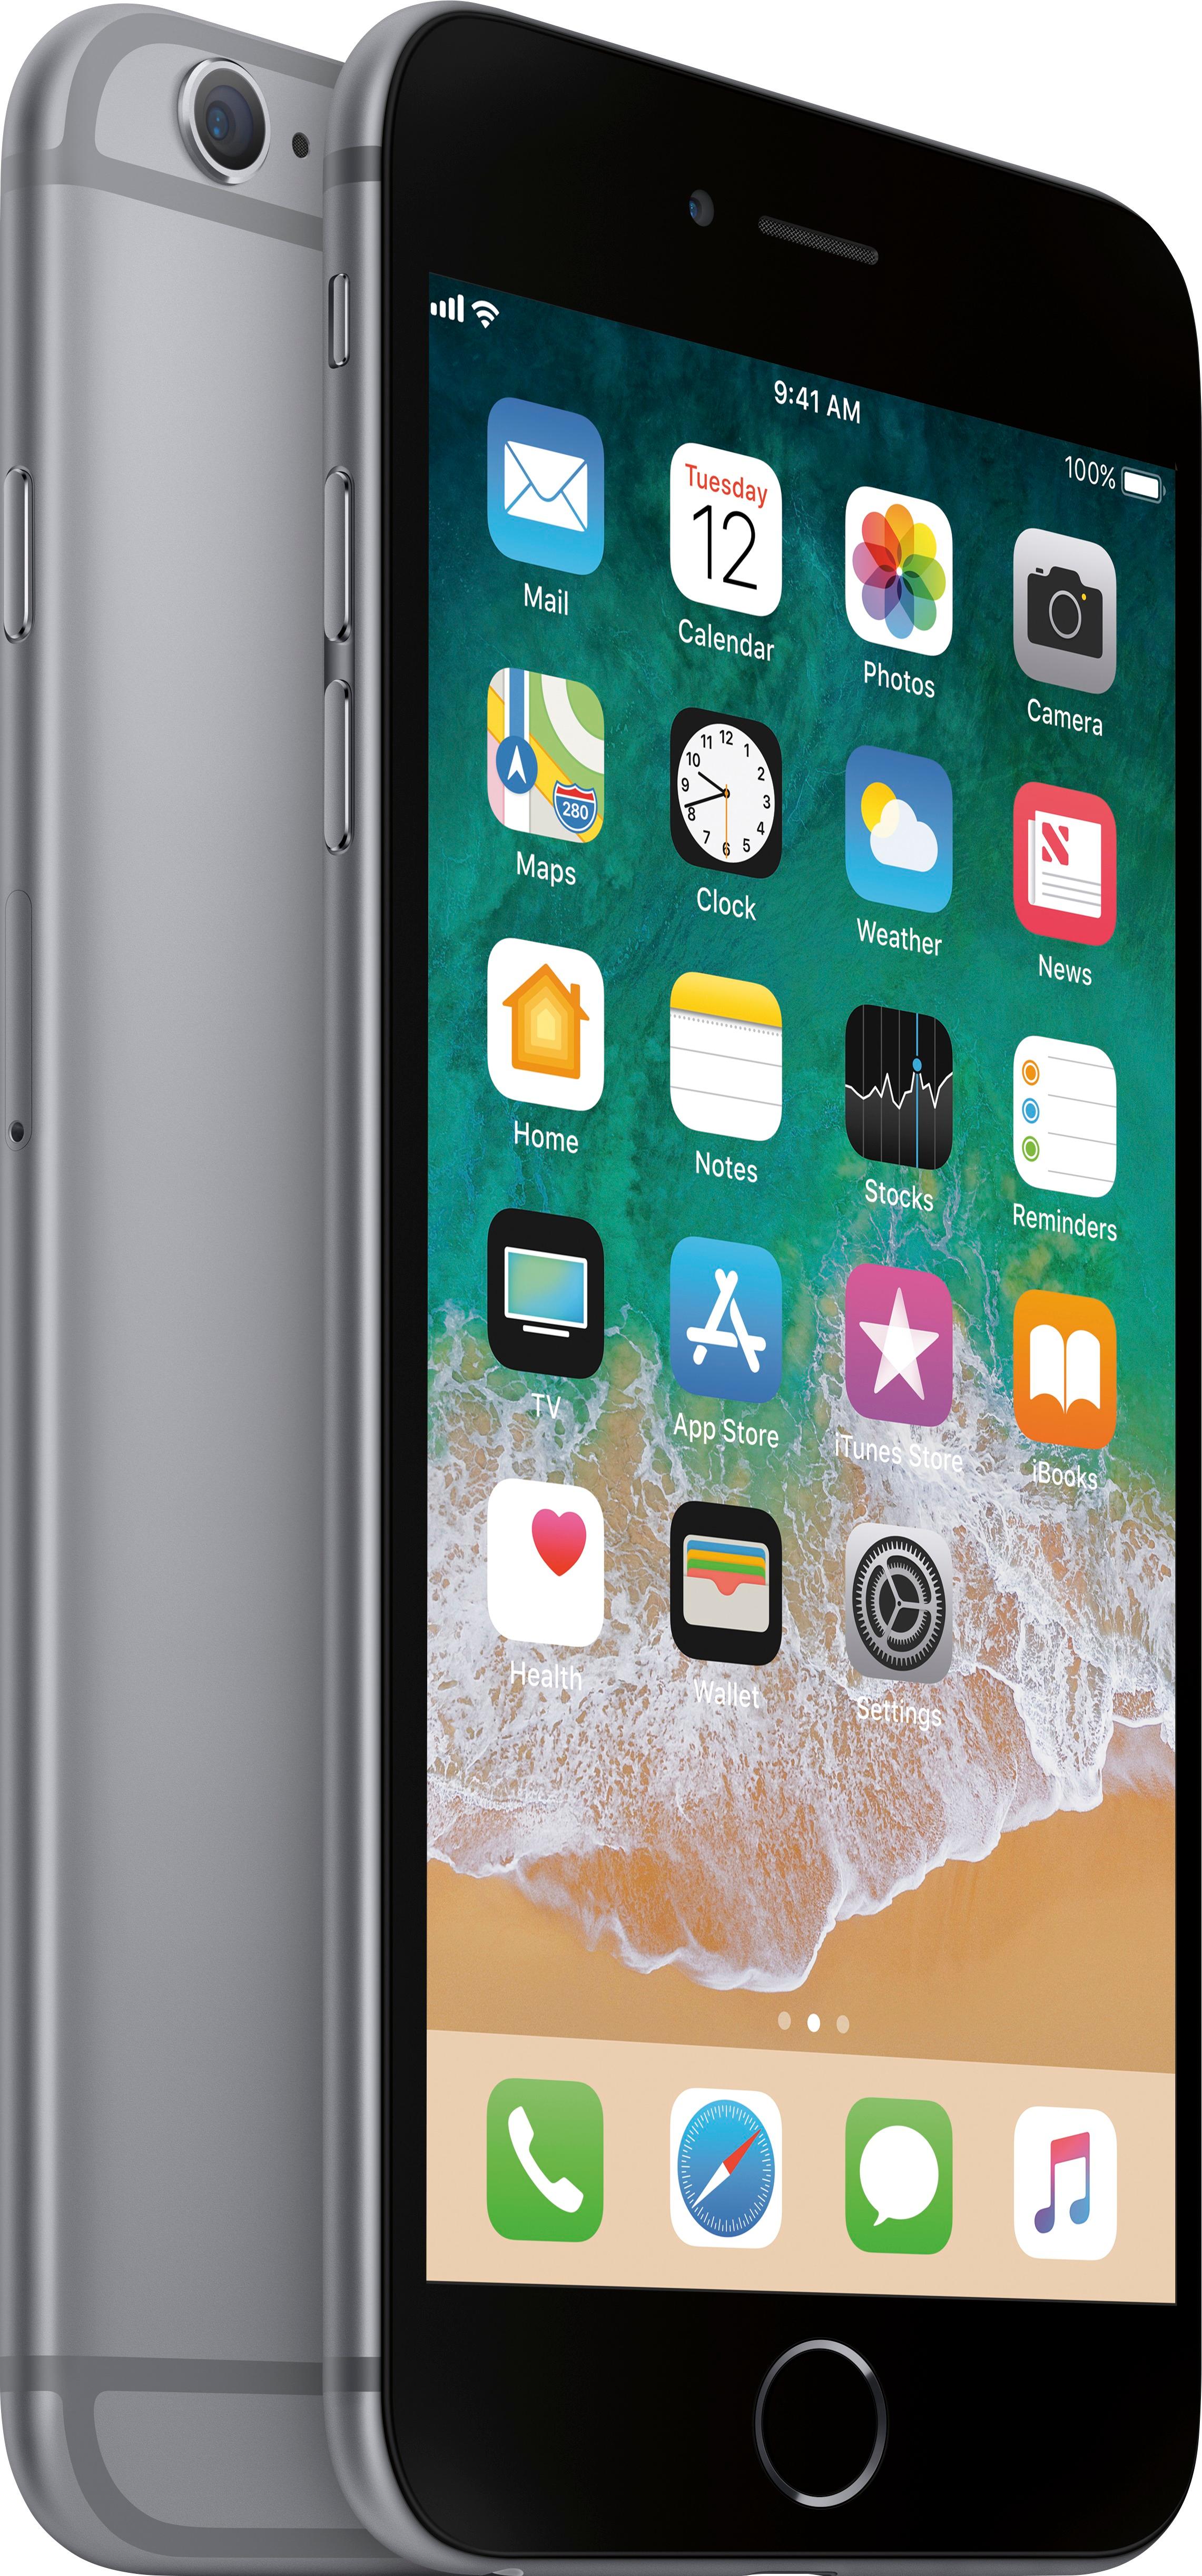 Apple iPhone 6s Plus 16GB Space Gray